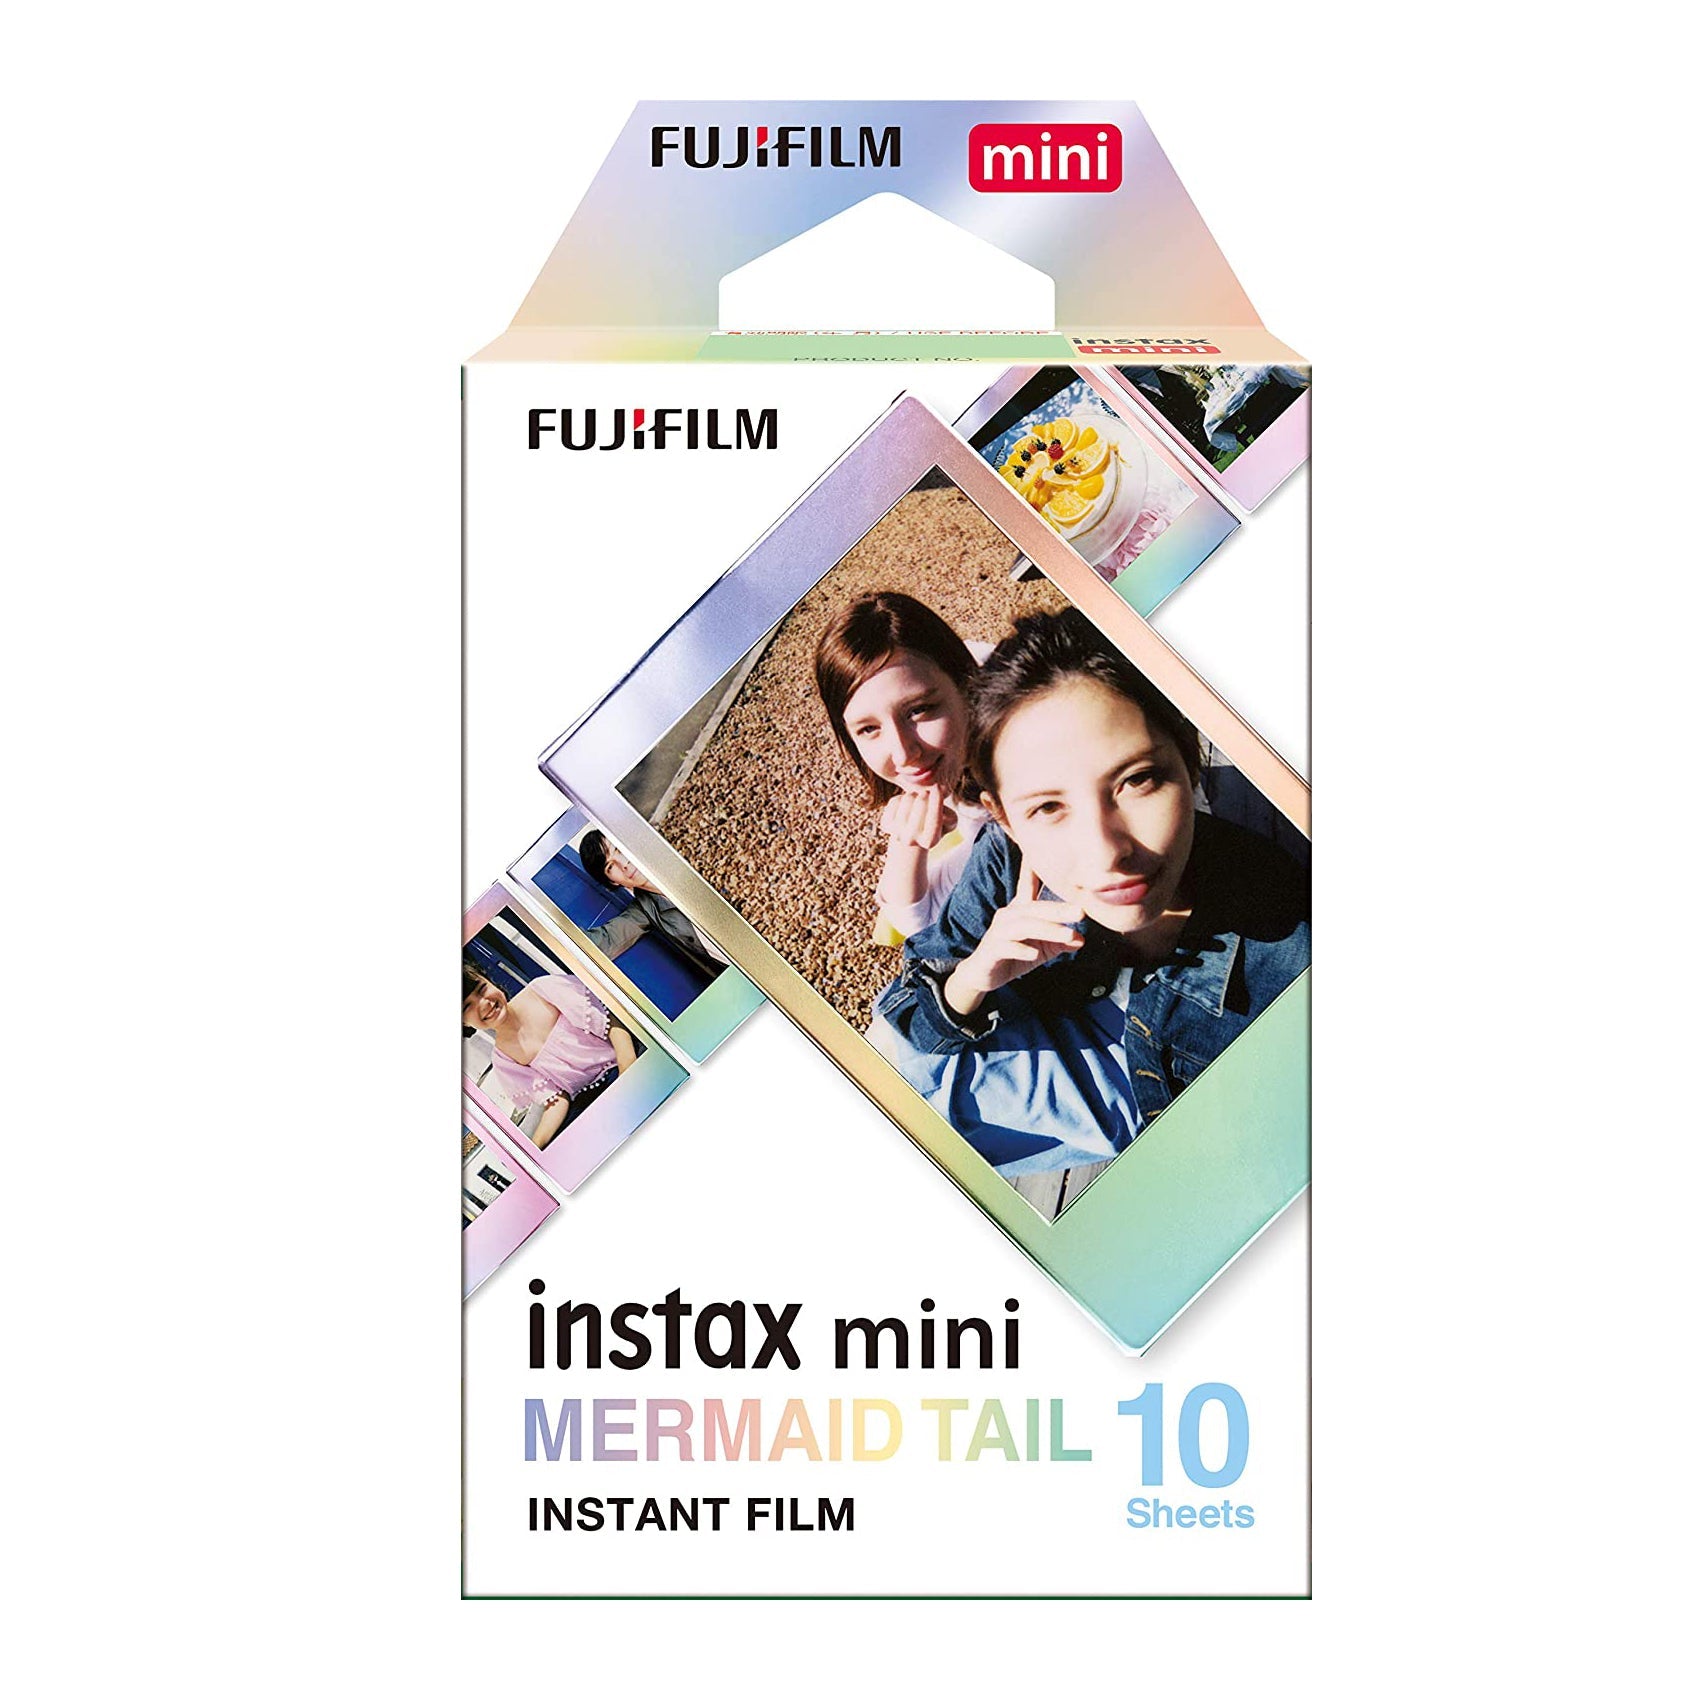 Fujifilm Instax Mini 10X1 mermaid tail Instant Film with Instax Time Photo Album 64 Sheets (ice blue)